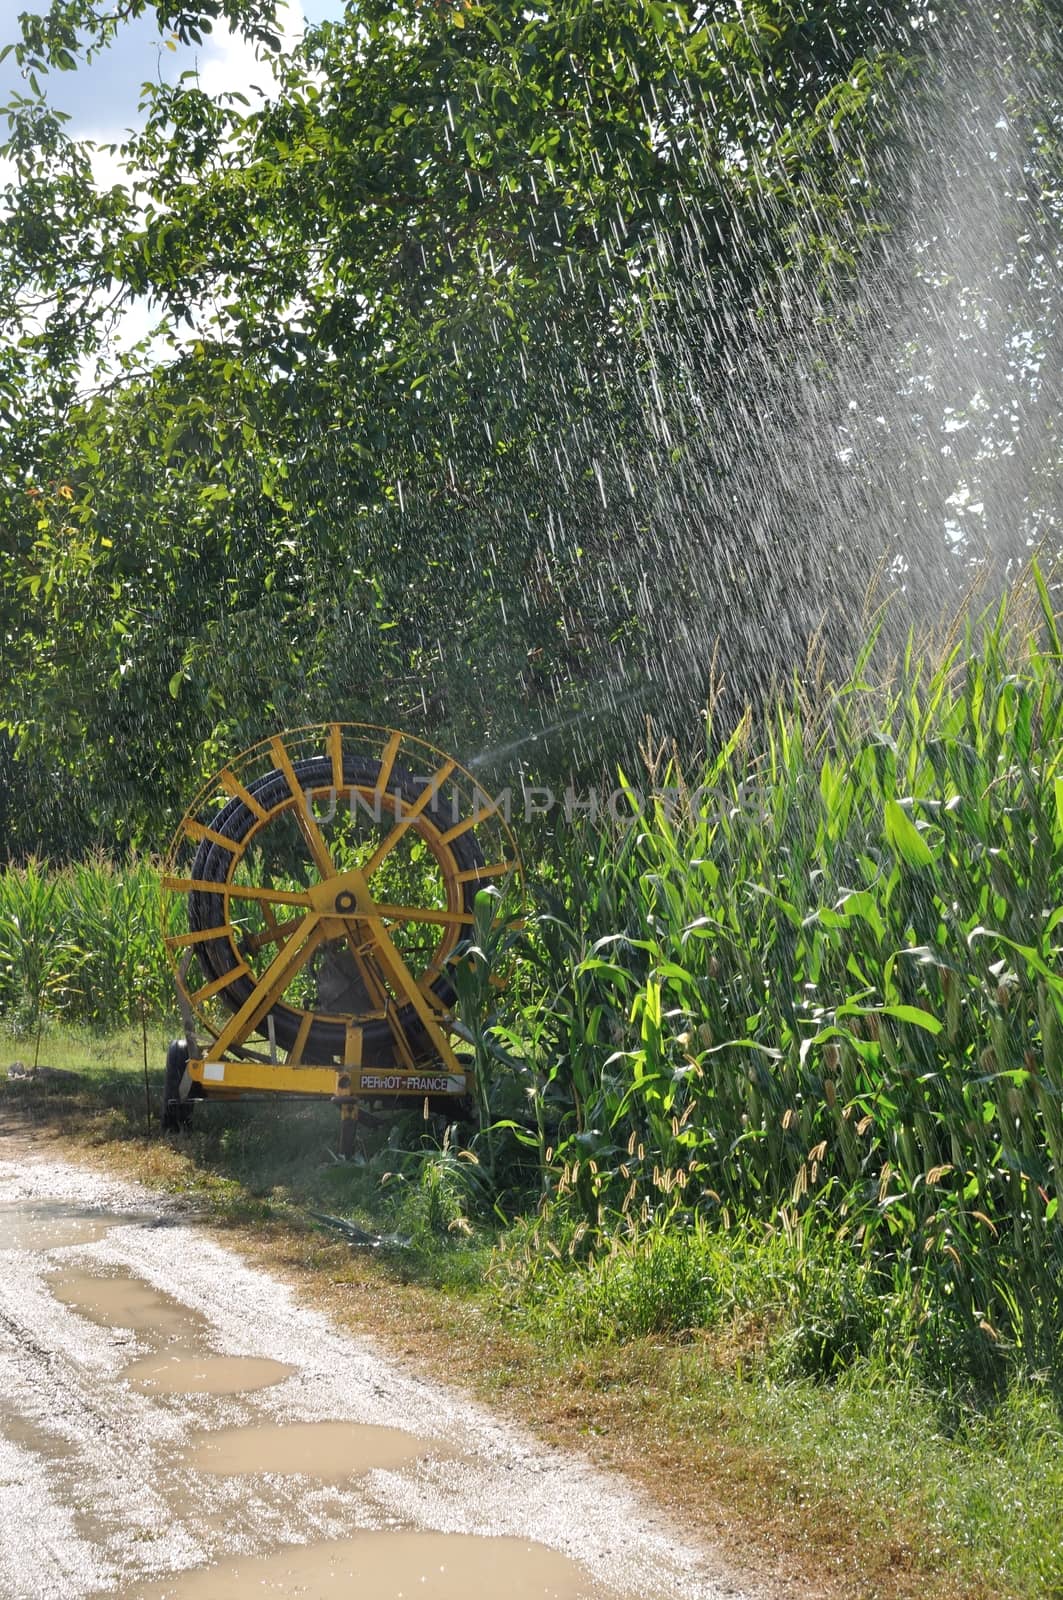 Water sprinkler installation in a field by BZH22